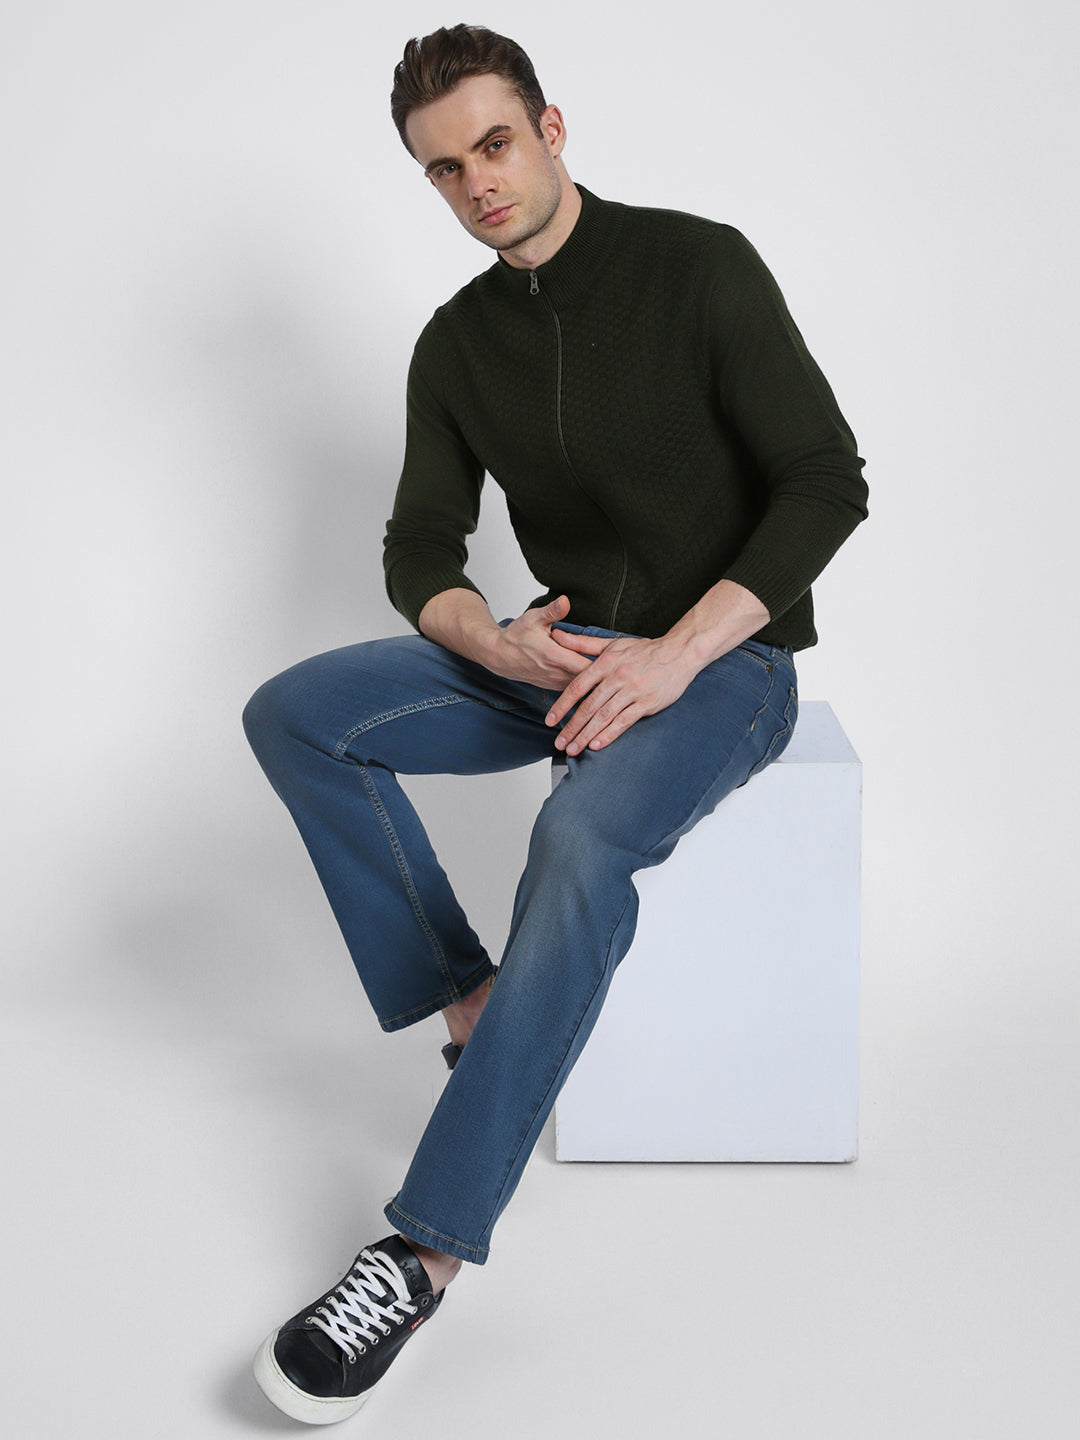 Dennis Lingo Men's Olive Solid Mock Full Sleeves Full Zip Sweater